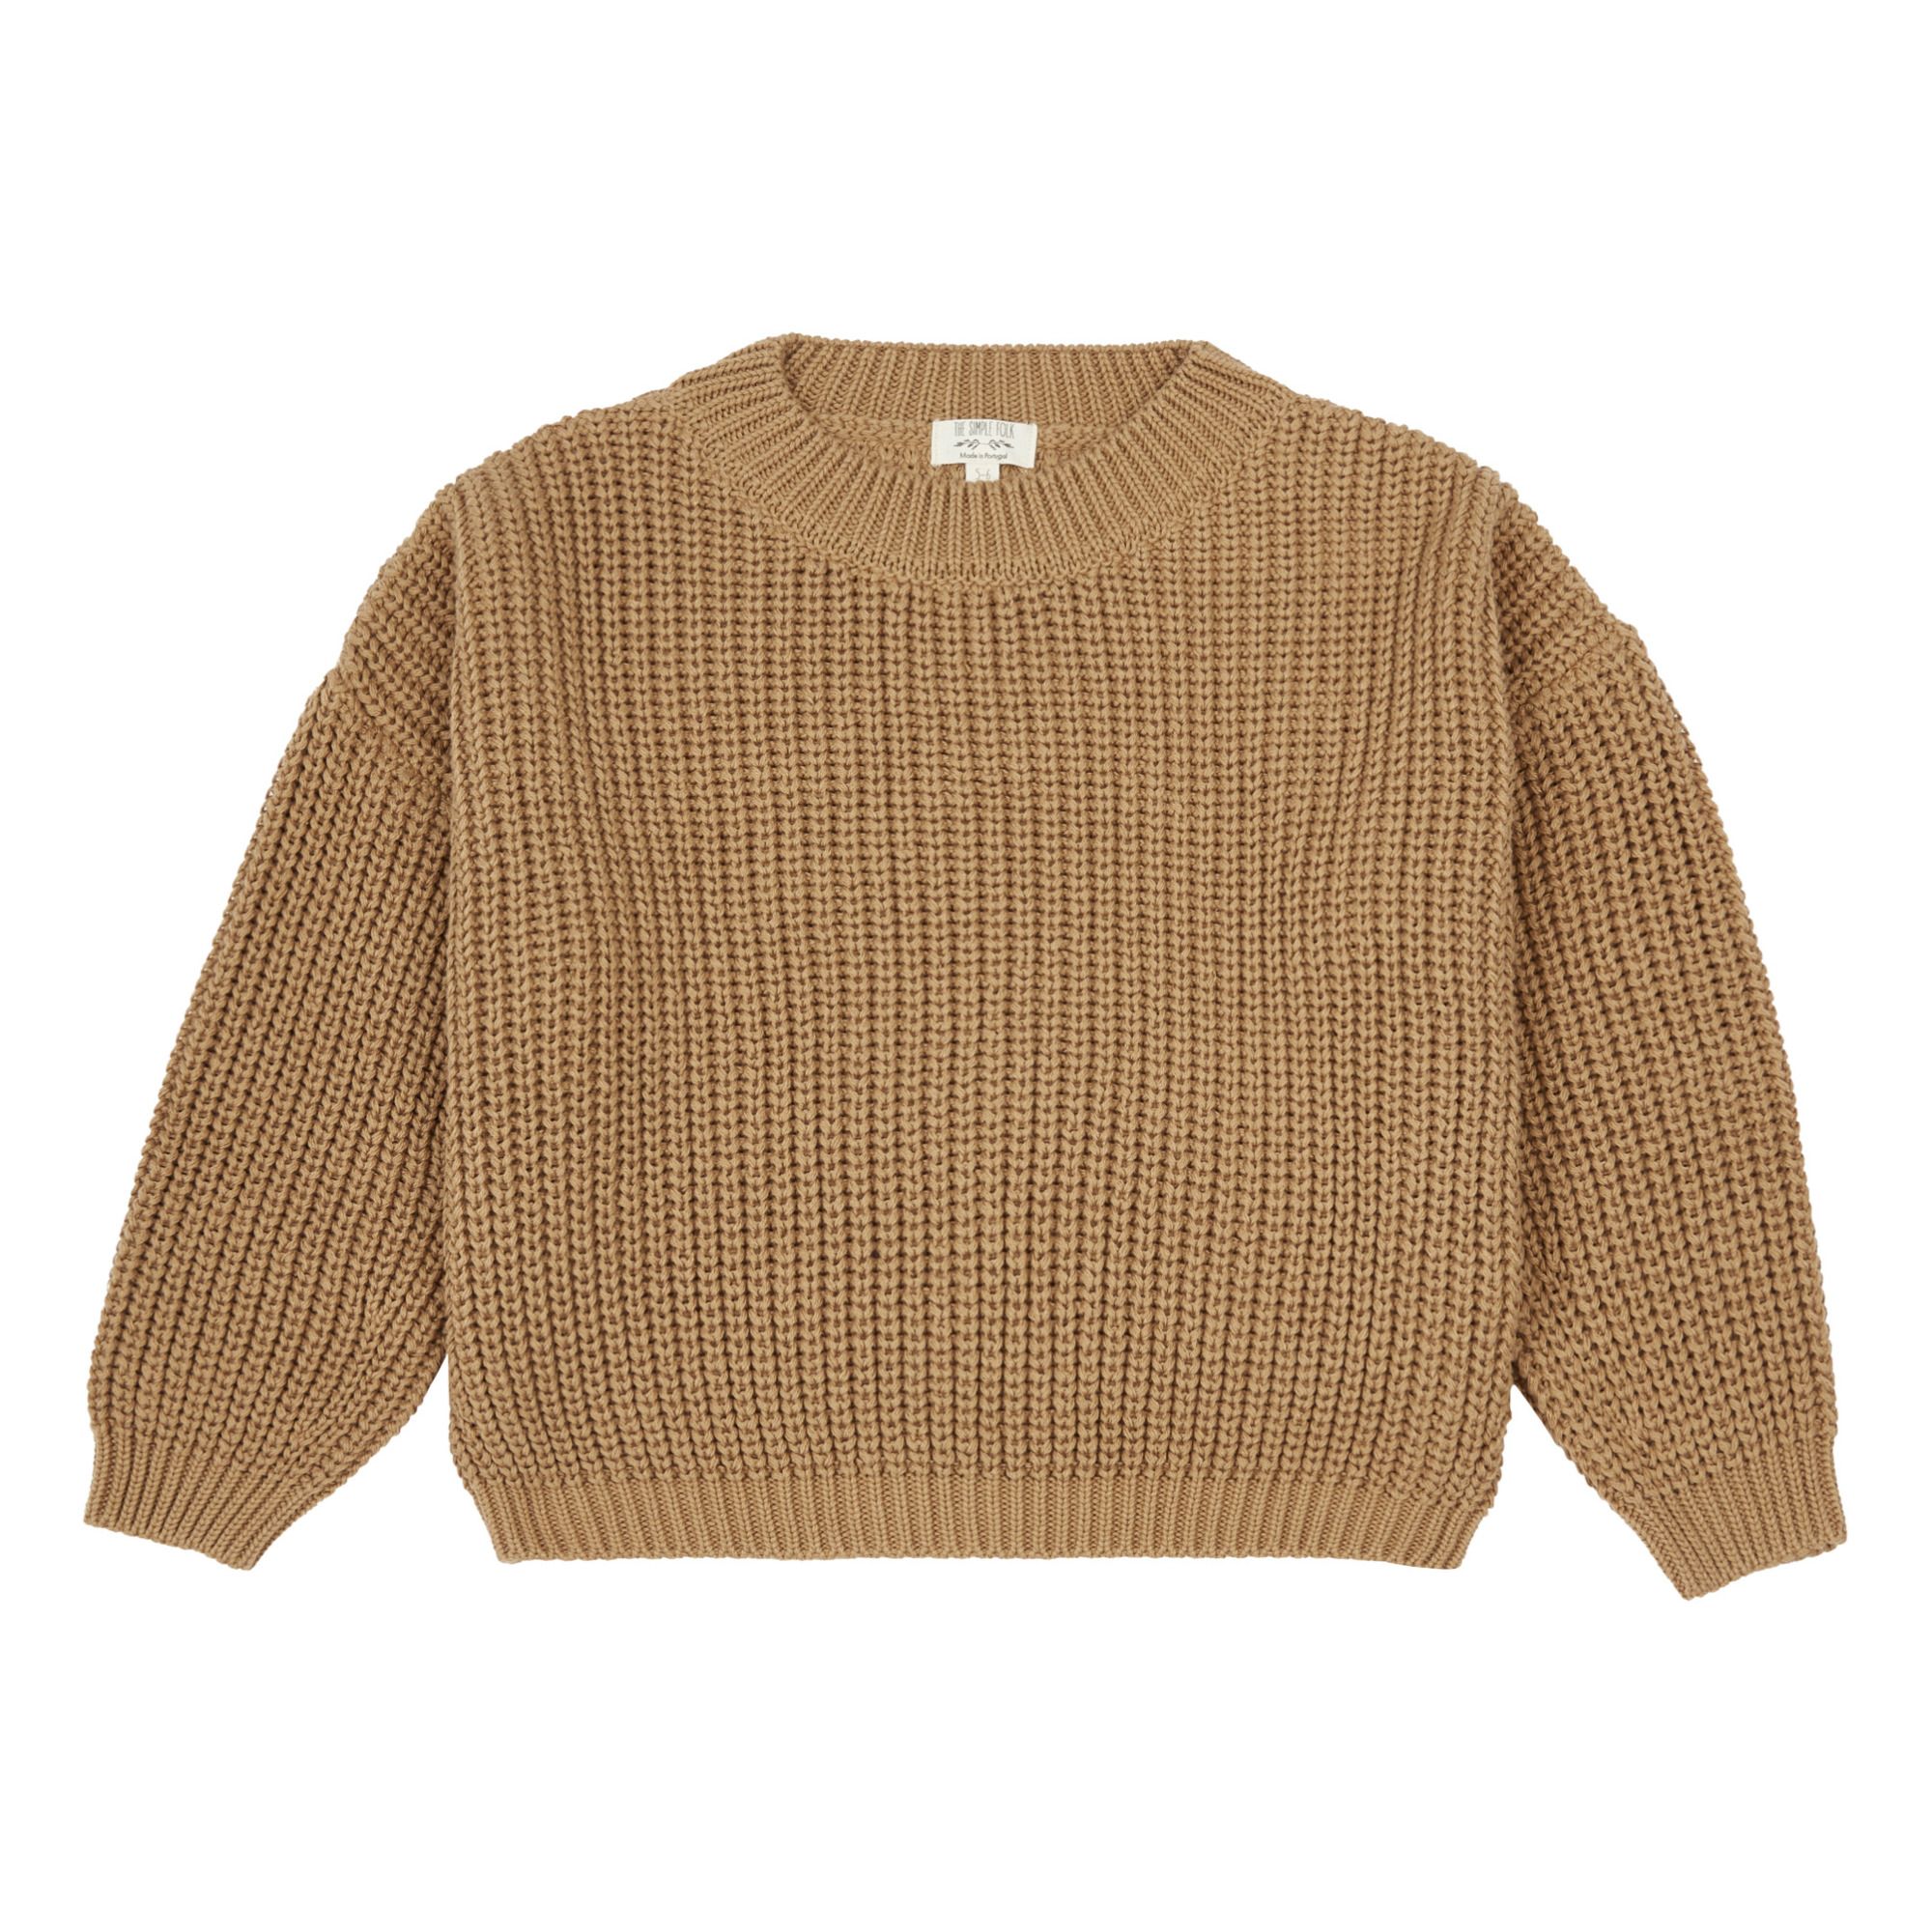 The Simple Folk - Organic Cotton Knitted Sweatshirt - Caramel | Smallable